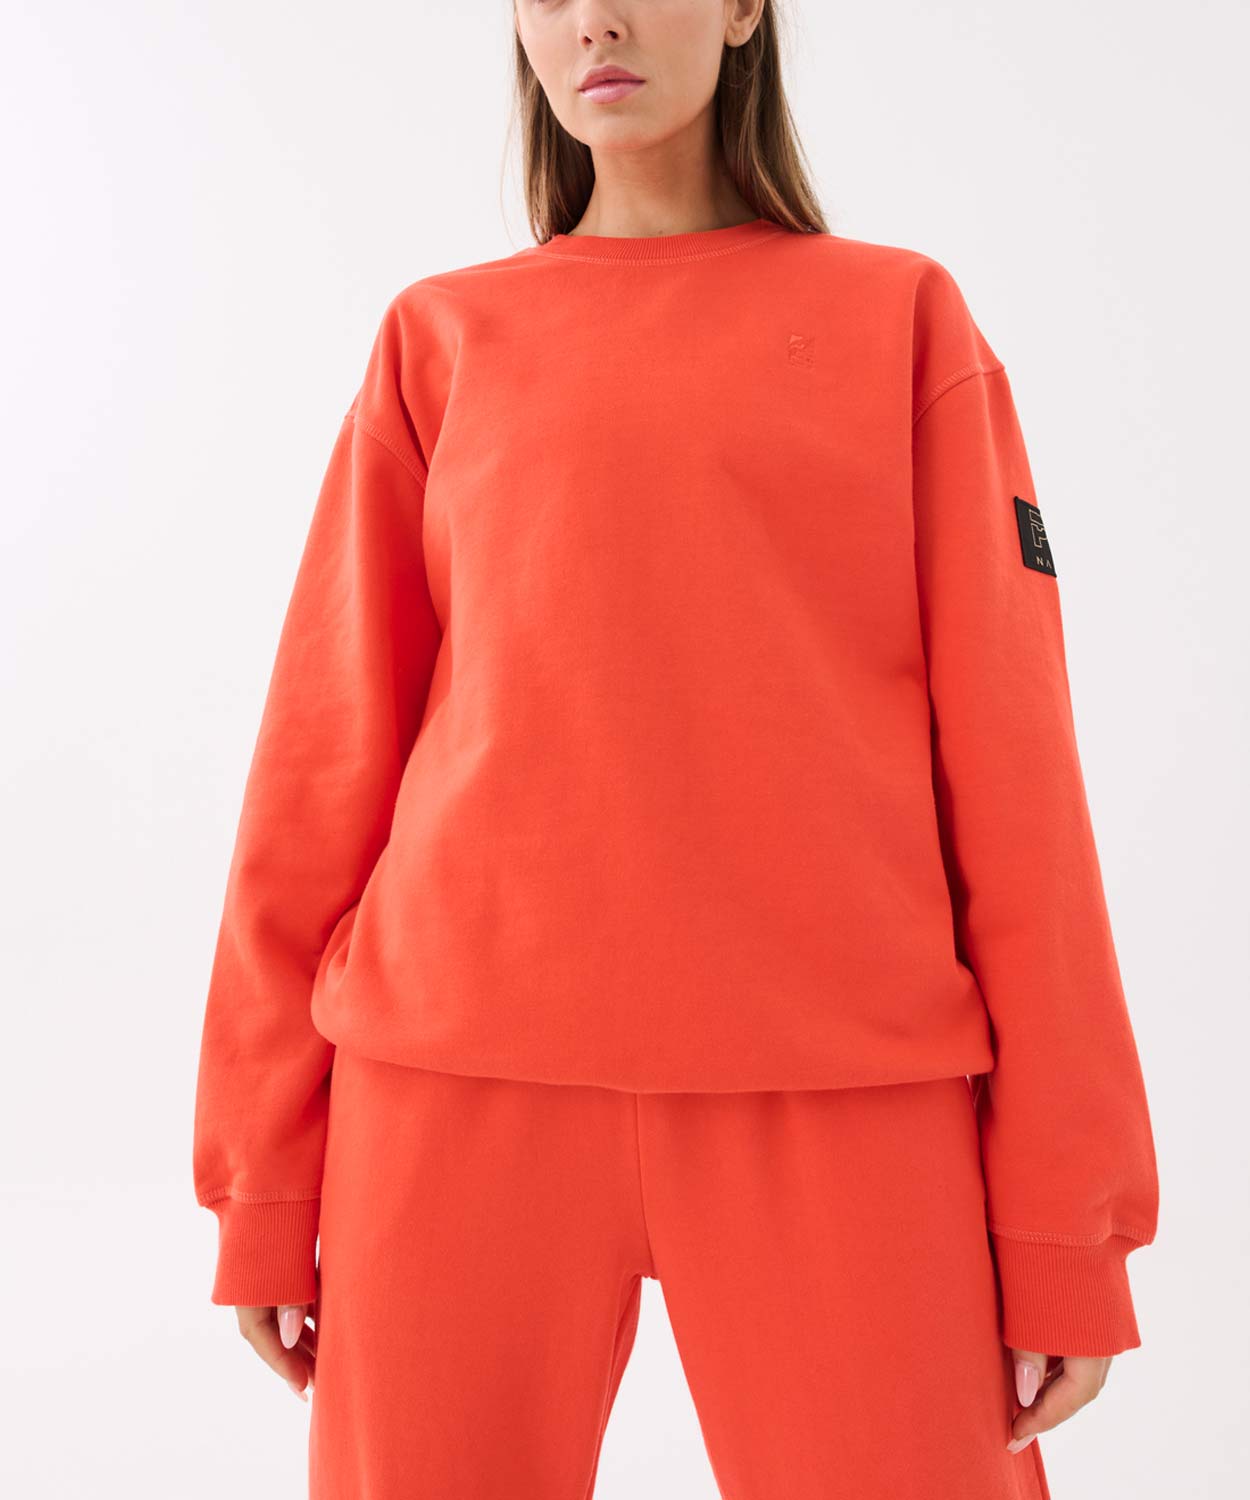 Women's Primary Sweater - Final Sale